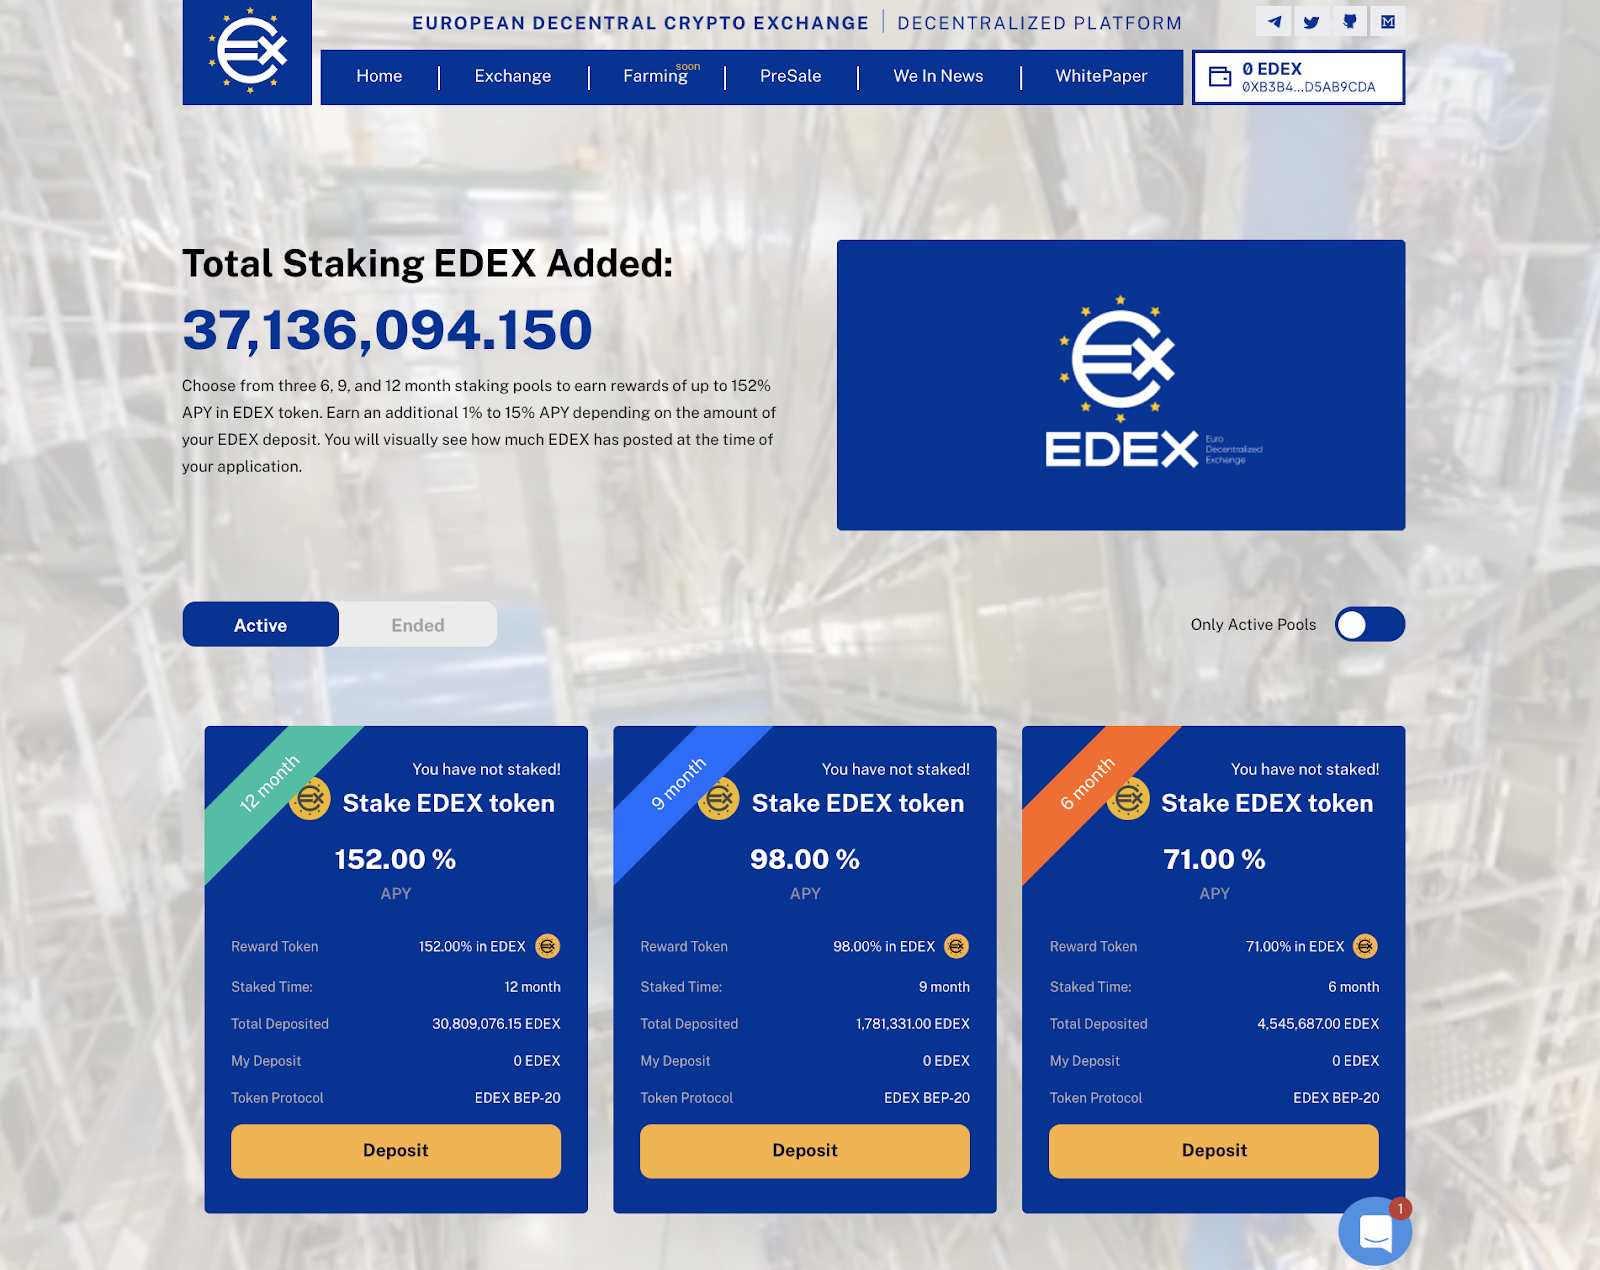 EuroSwap EDEX Announces Final Session Before Launching on Major Exchange